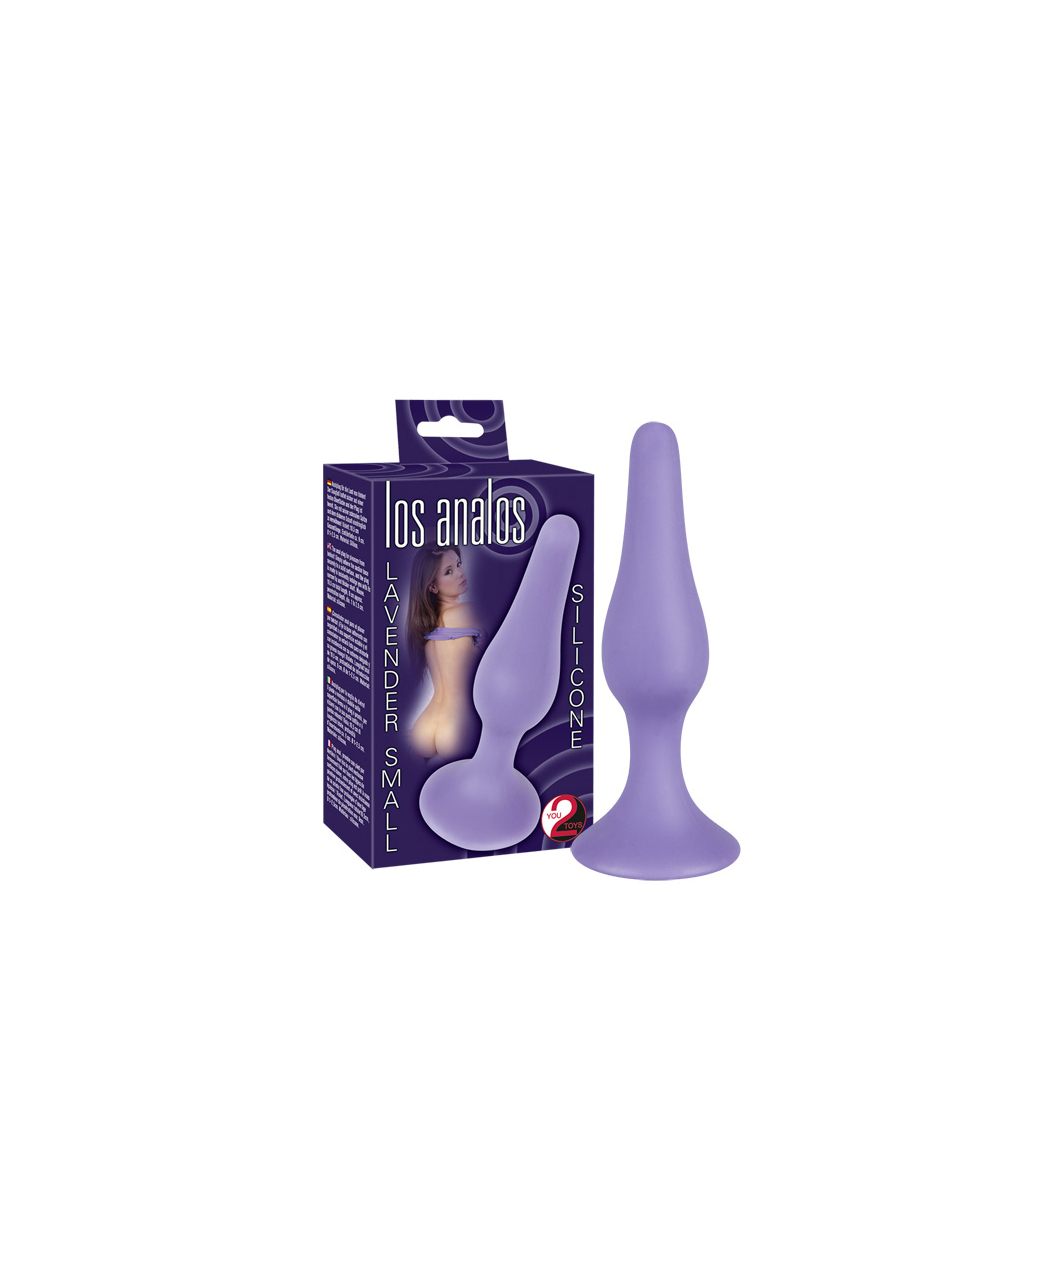 Los Analos Lavender Plug